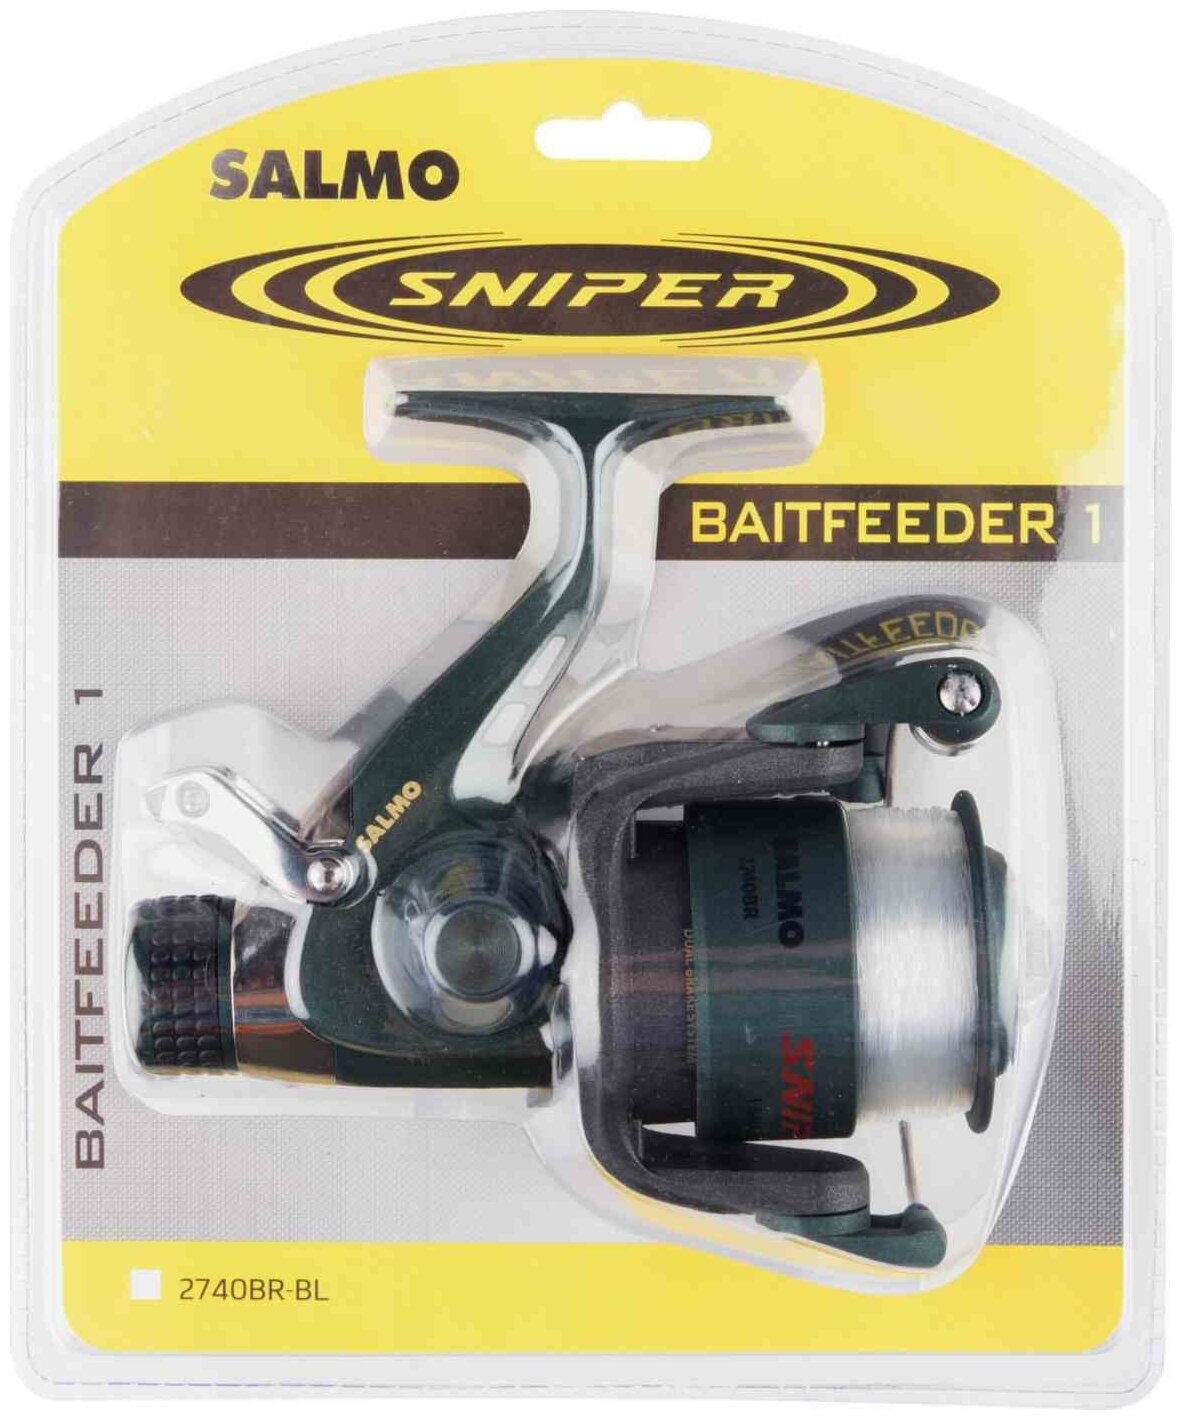 Катушка безынерционная Salmo Sniper BAITFEEDER 1 40BR блистер - фото №2